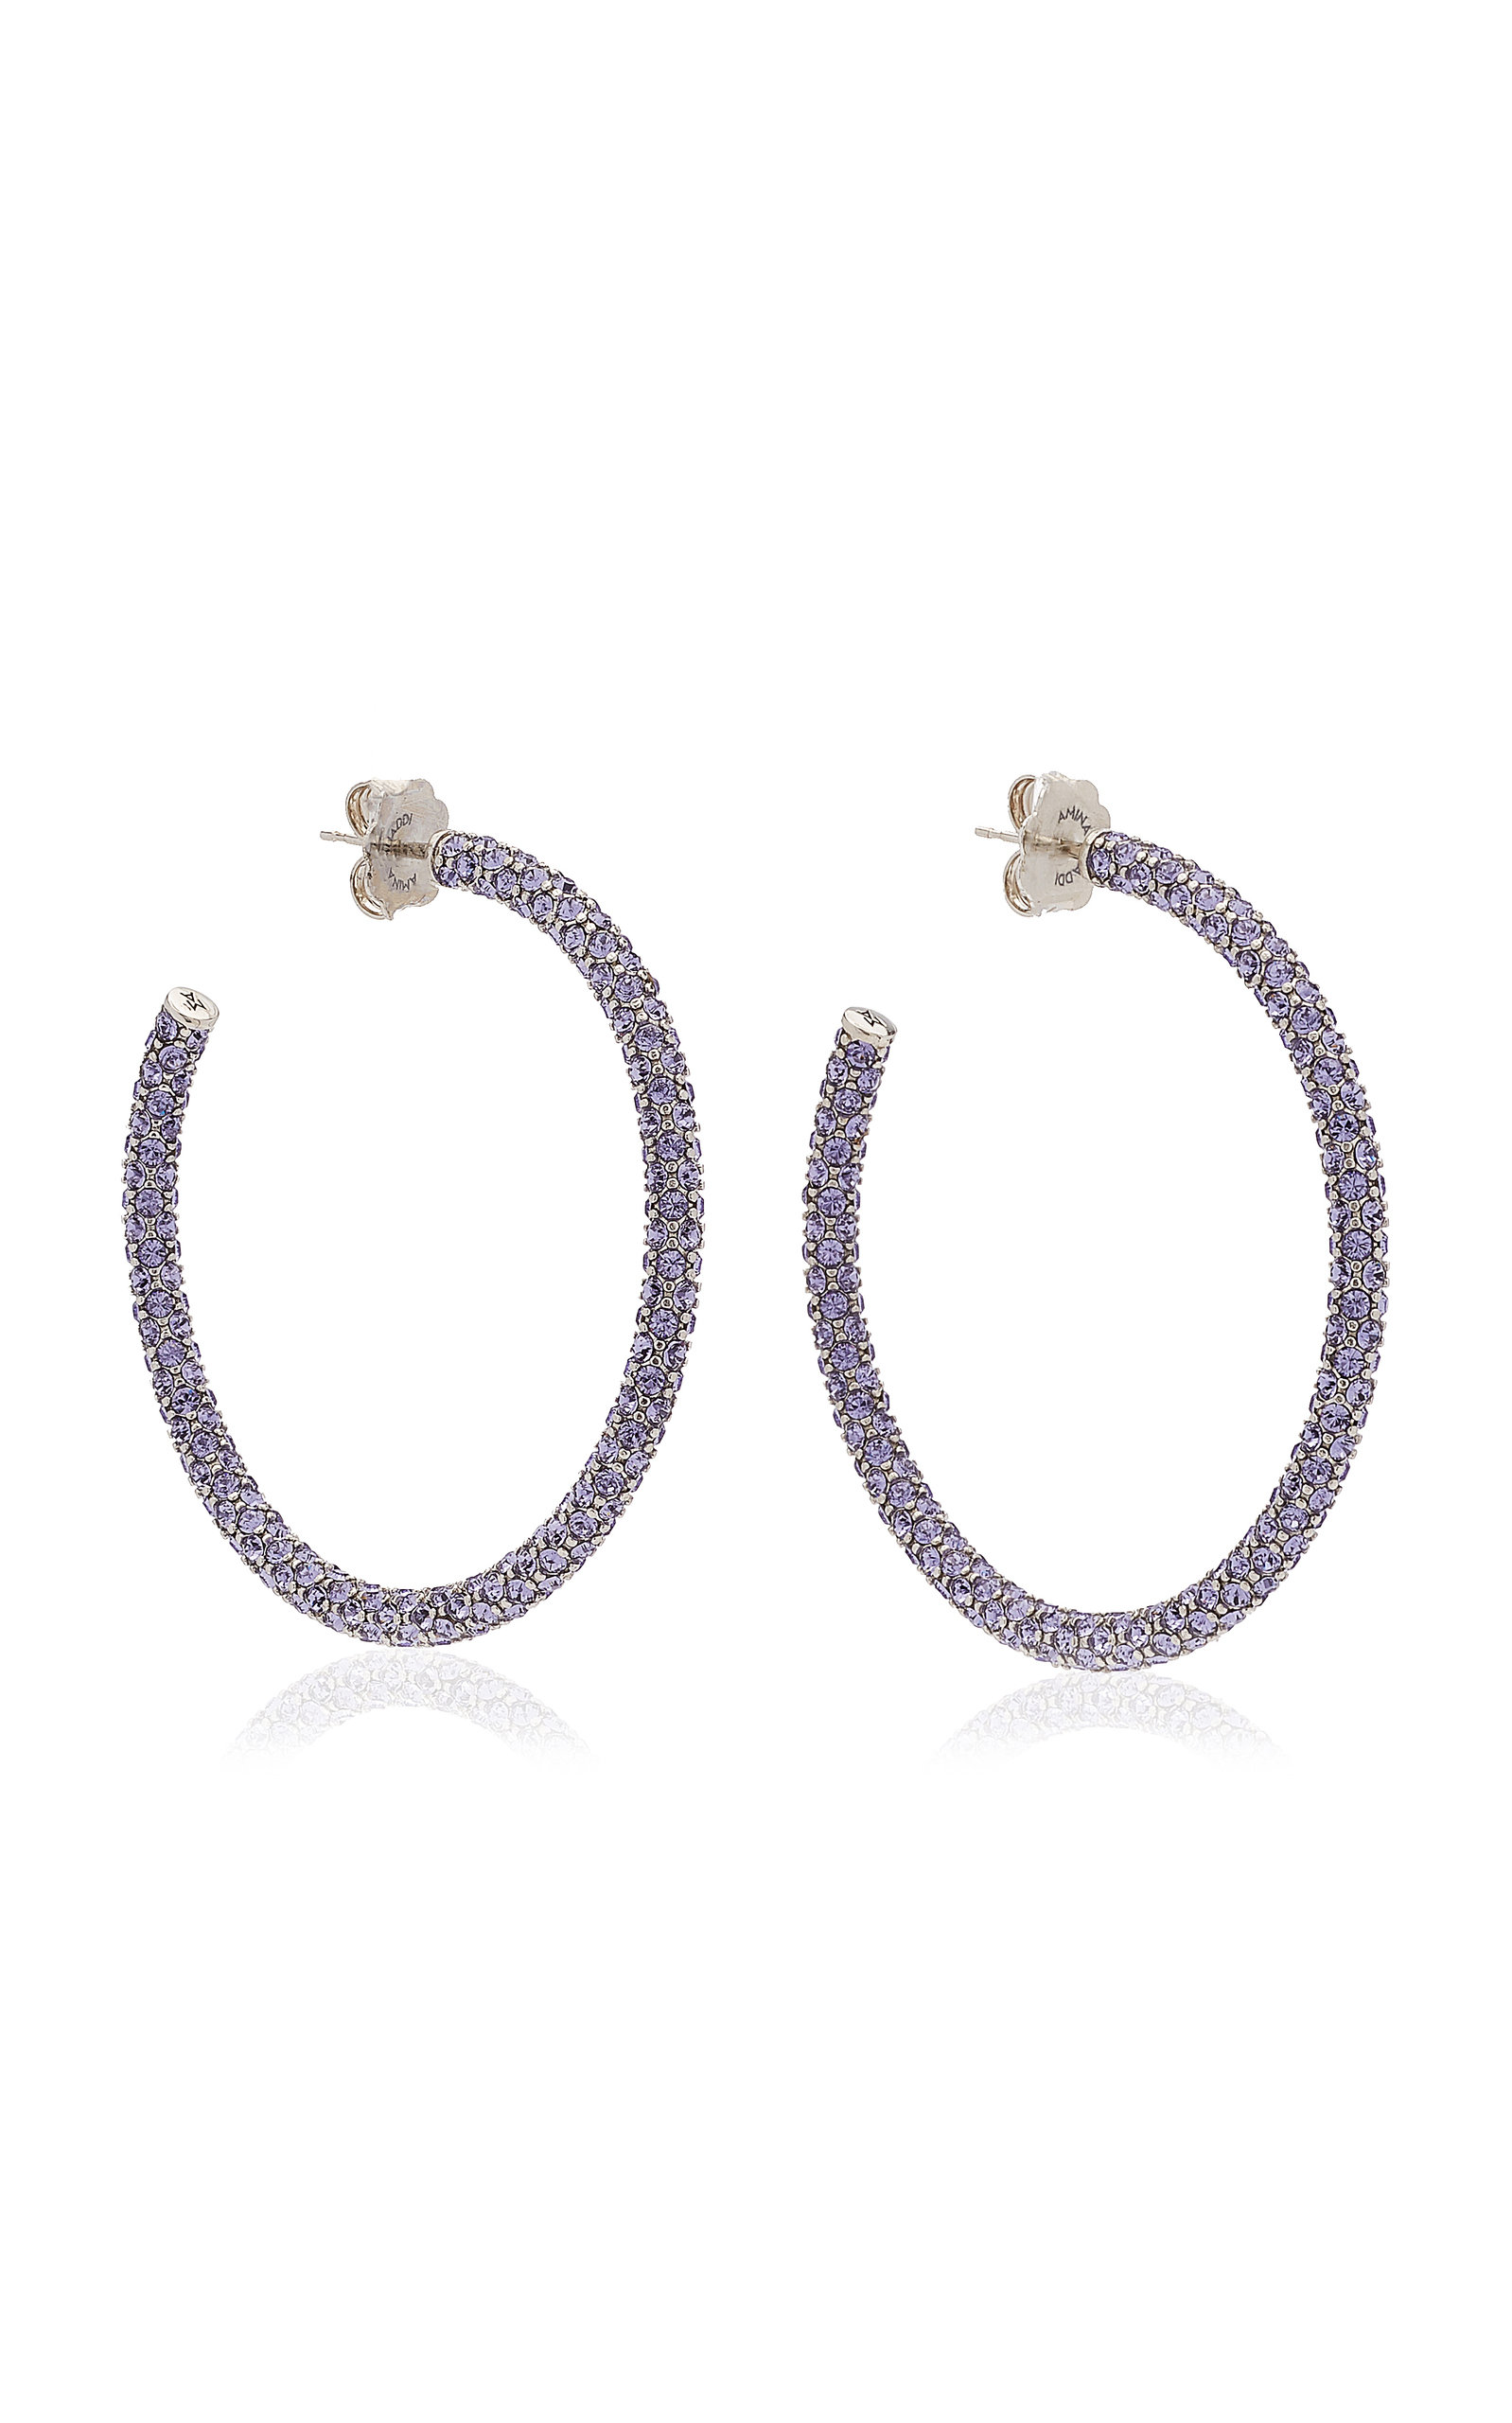 Amina Muaddi - Women's Cameron Hoop Earrings - Purple/pink - Moda Operandi - Gifts For Her